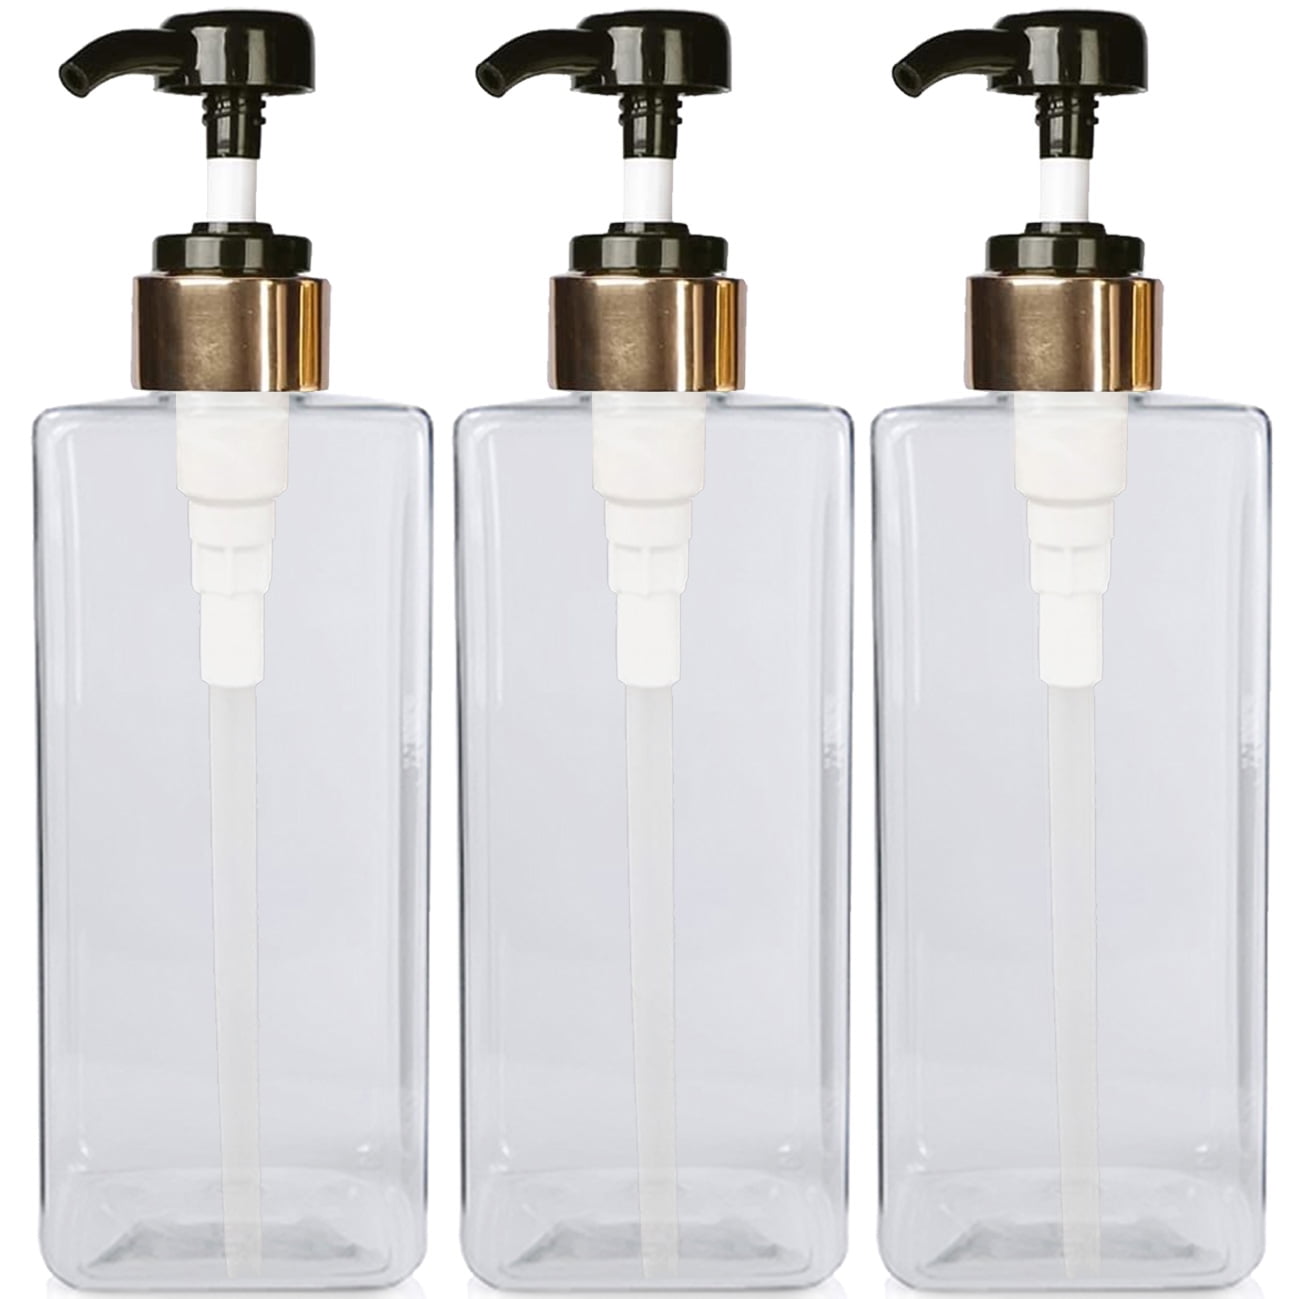 3 Empty Shampoo Square Dispenser Pump Bottle 800ml Gold Black with Waterproof Labels (Shampoo, Body Wash) - Walmart.com